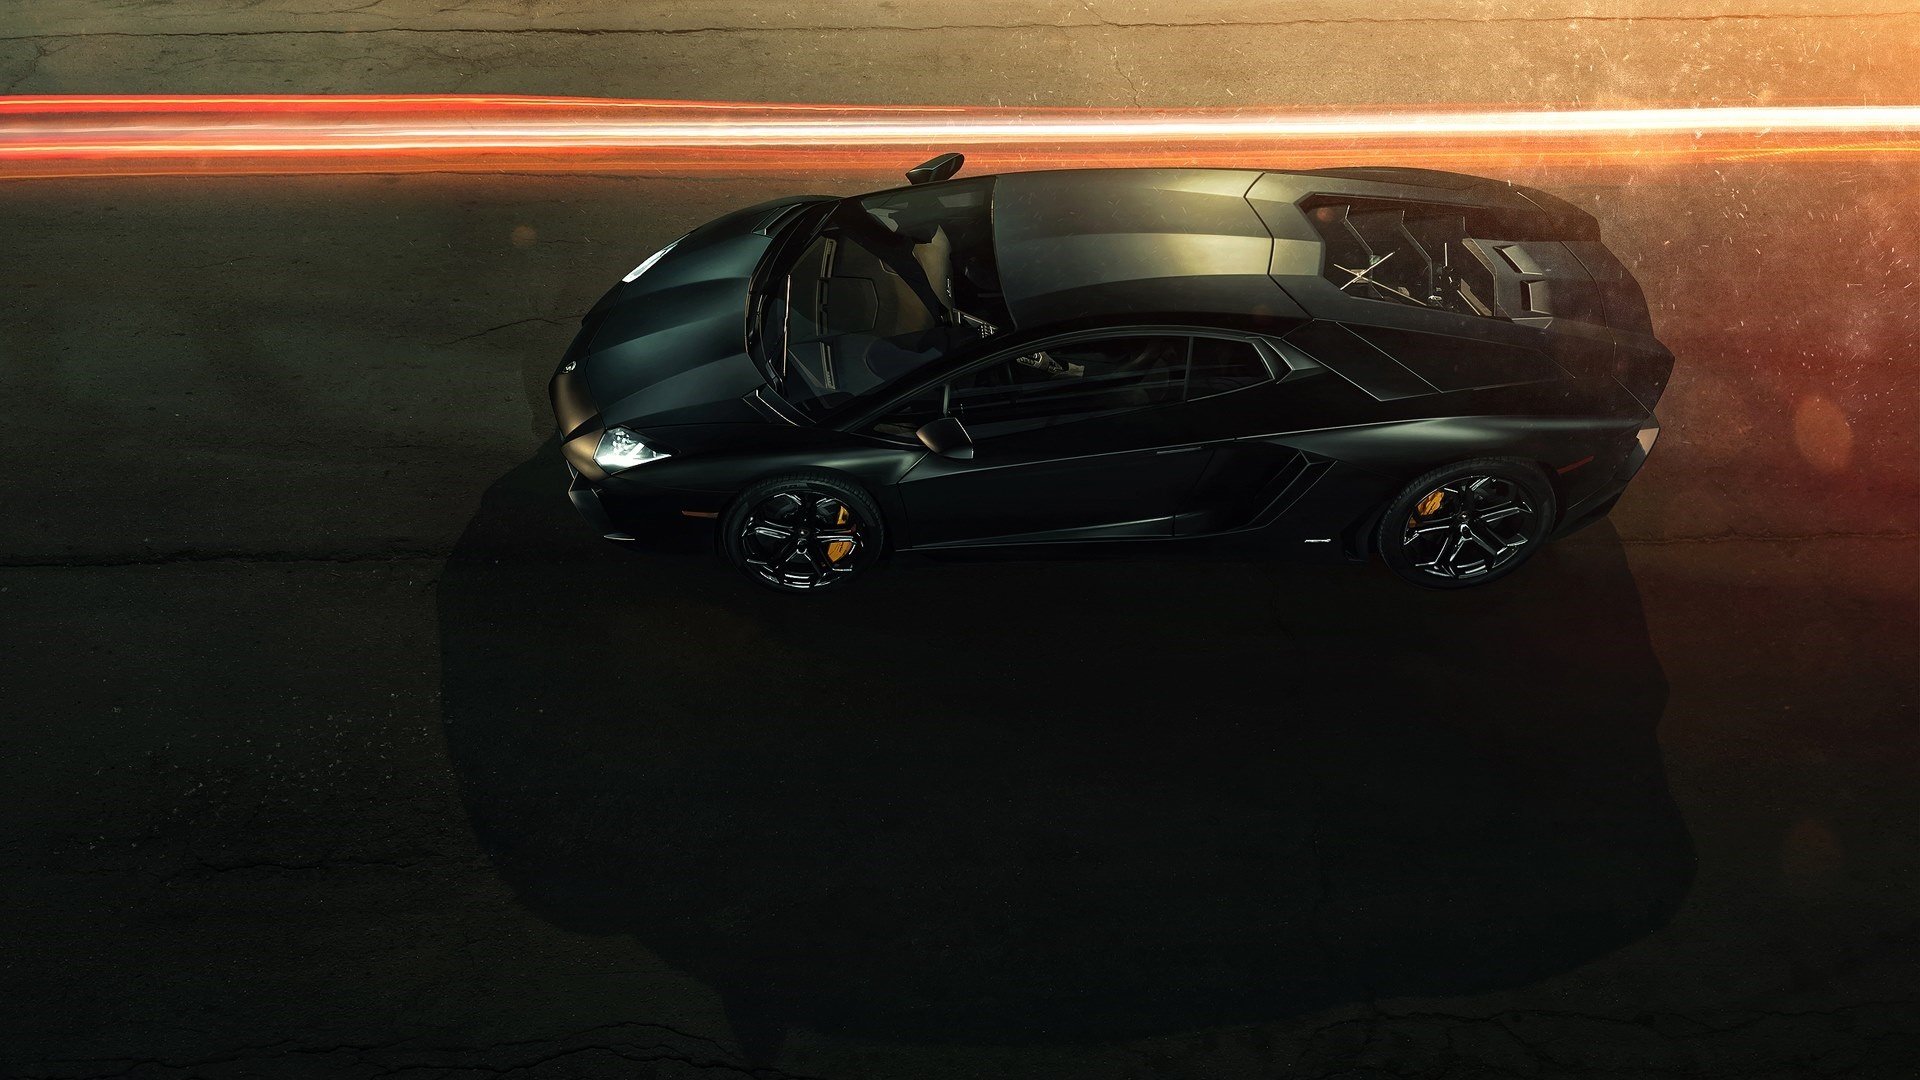 Best Lamborghini Aventador wallpaper ID:323977 for High Resolution 1080p desktop